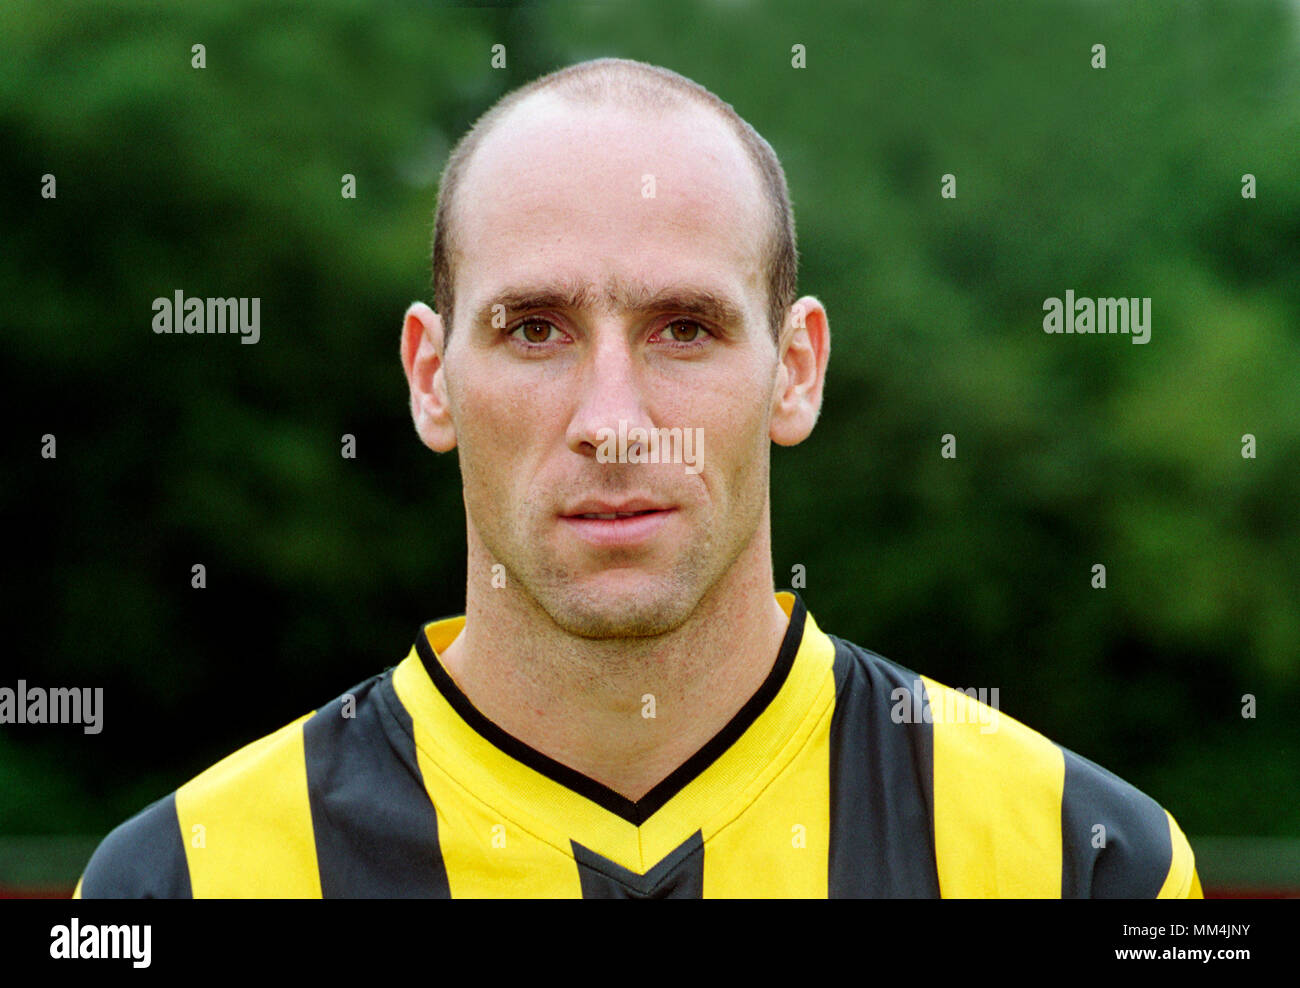 Football: Dortmund Germany 10.7.2001, Team portraits of German Bundesliga club Borussia Dortmund (BVB) Season 2001/2002 --- Jan KOLLER Stock Photo